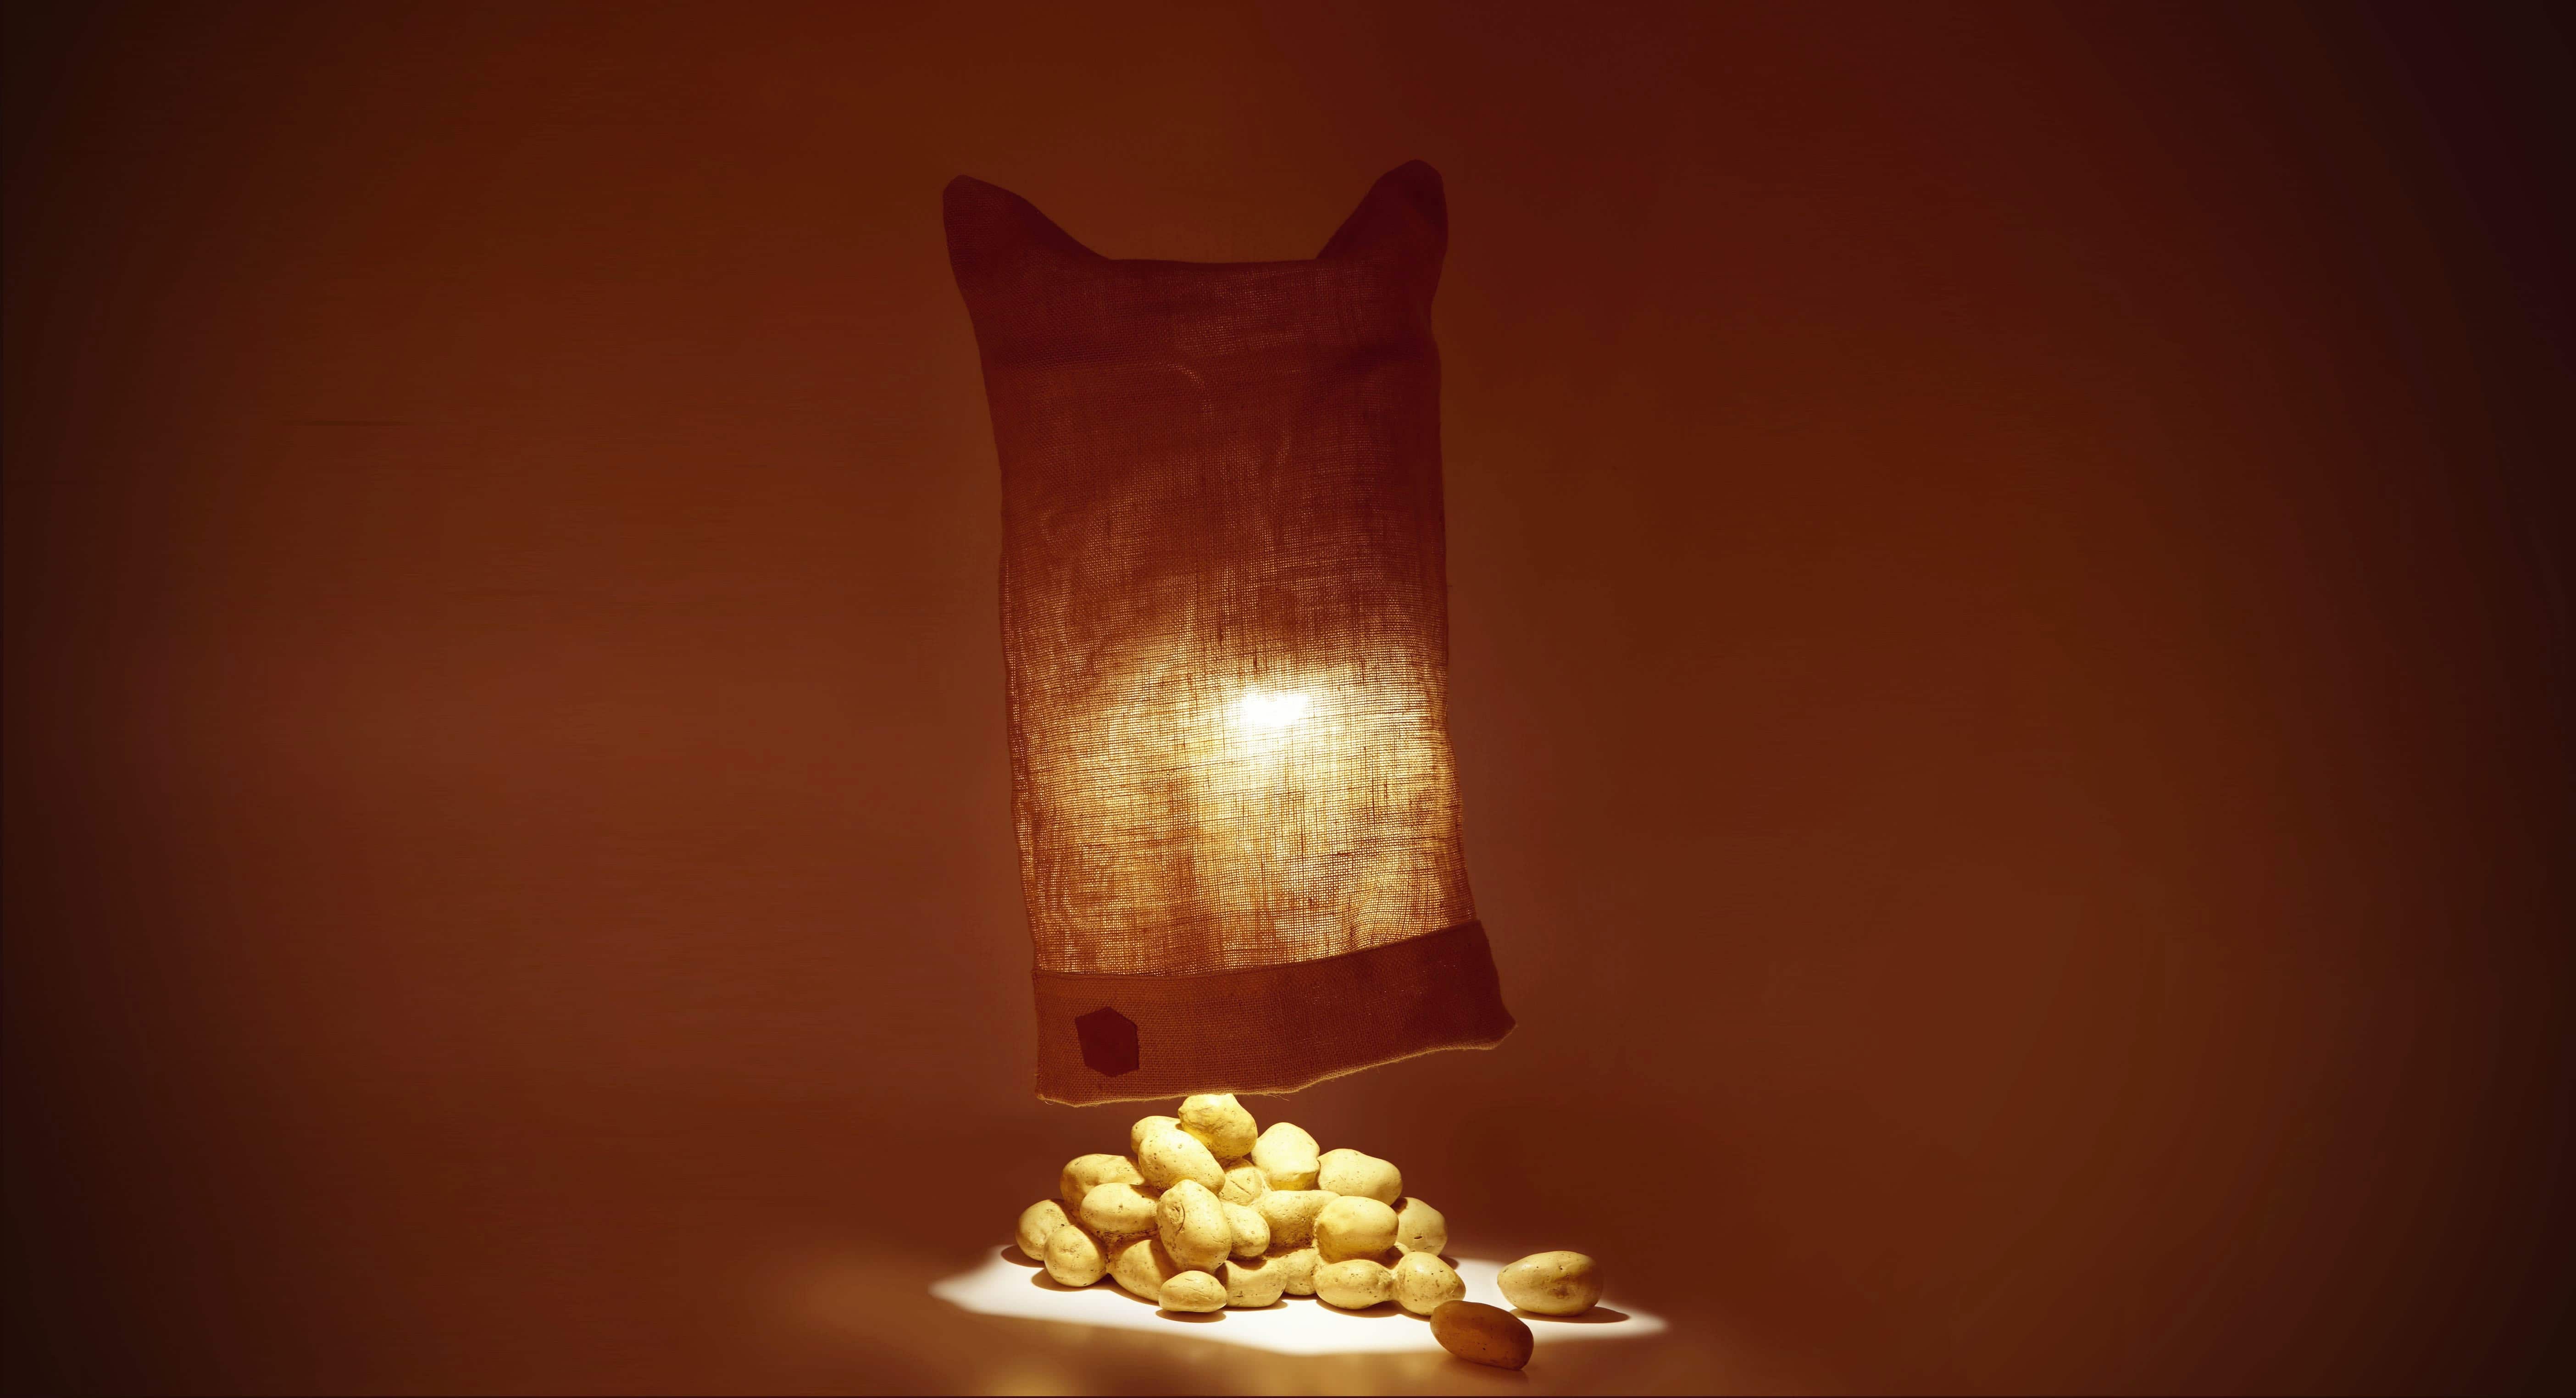 “La lampe patate”: the ordinary becomes extraordinary